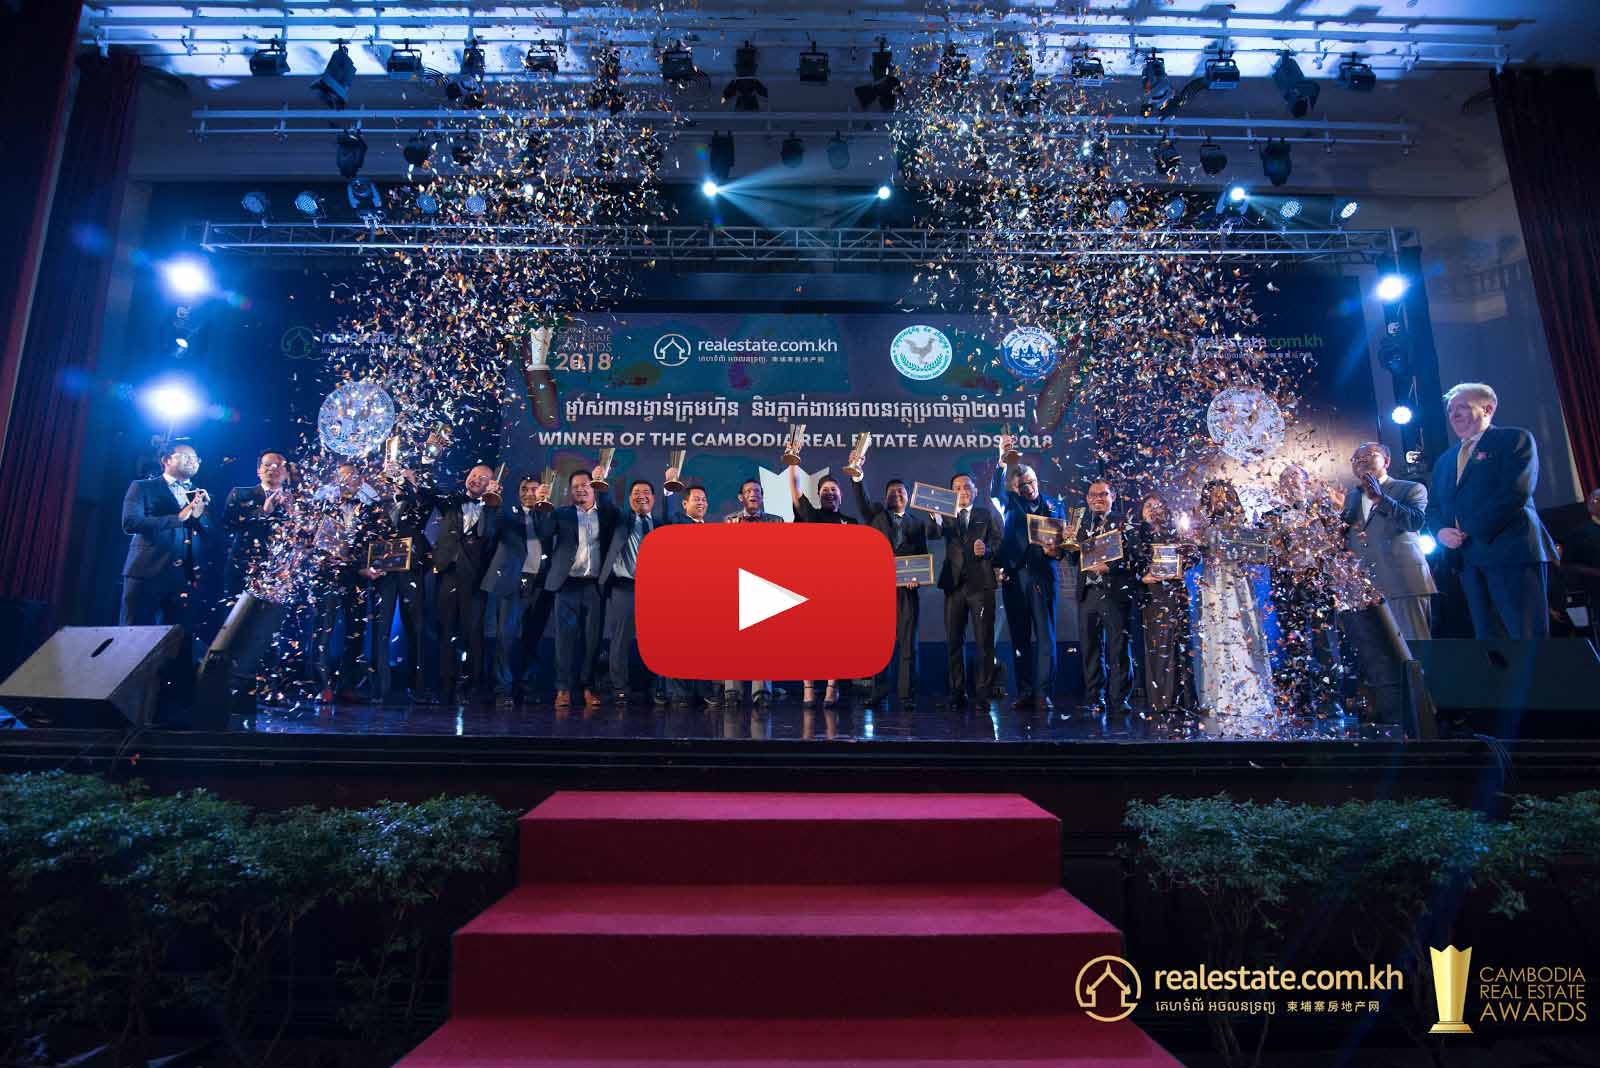 Winners of inaugural Cambodia Real Estate Awards 2018 announced